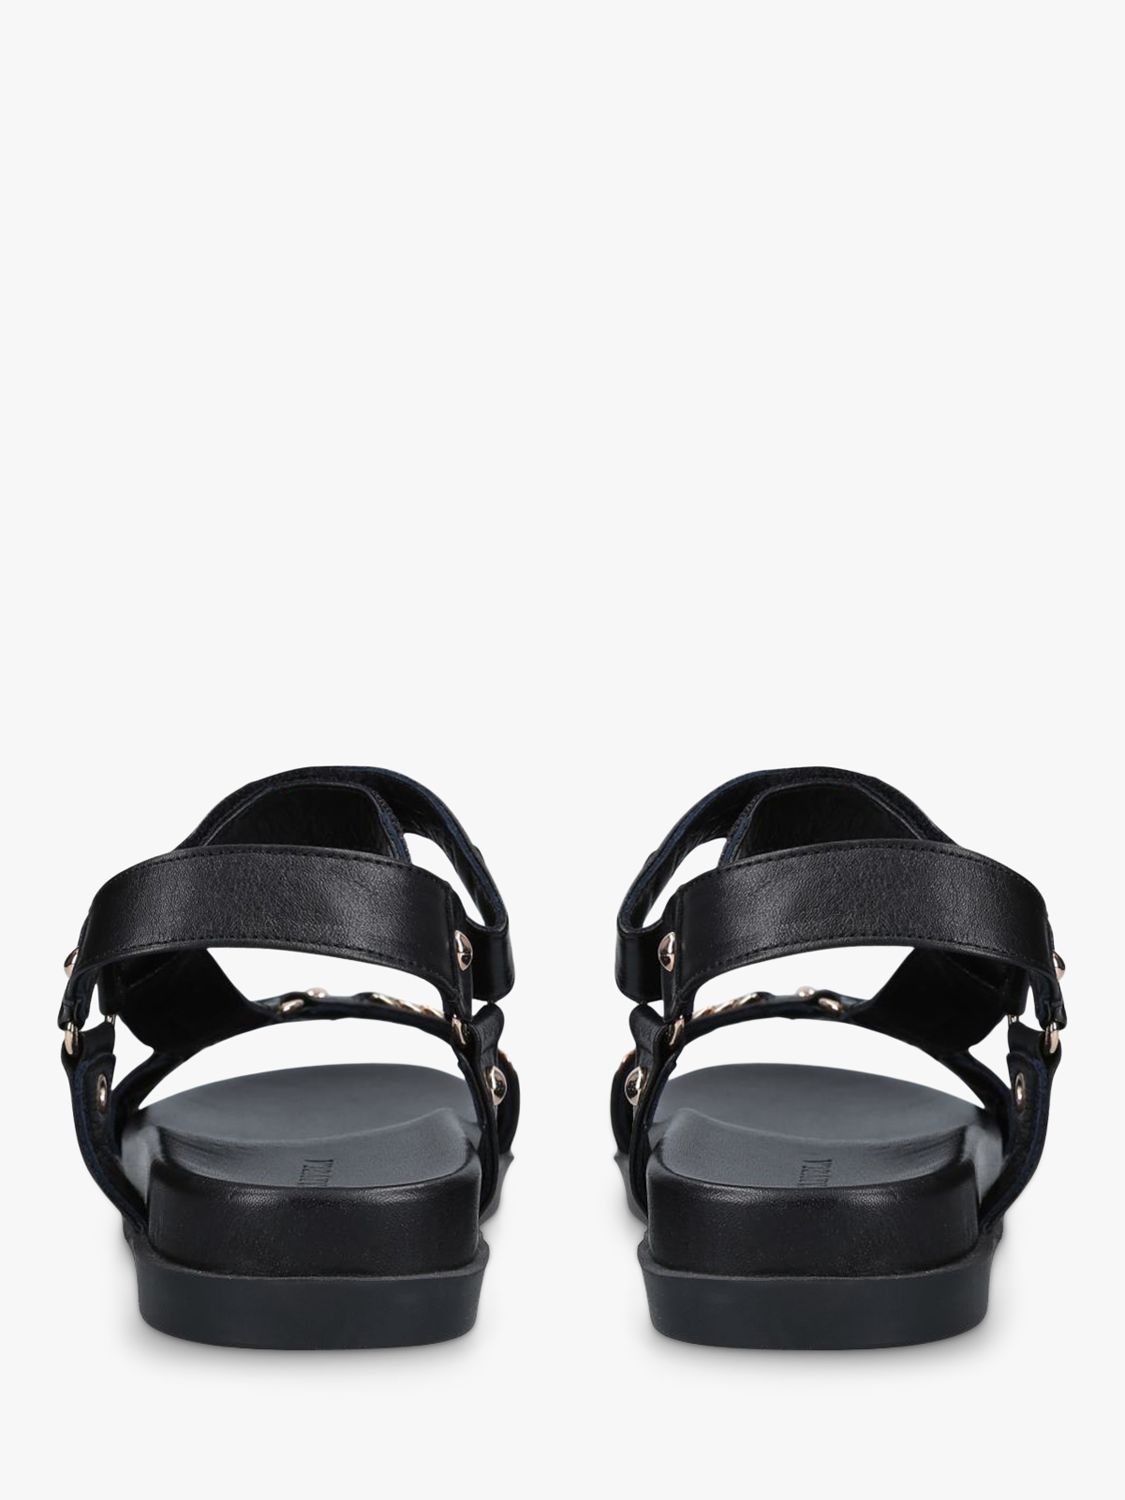 Carvela Kostello Chain Leather Sandals, Black at John Lewis & Partners